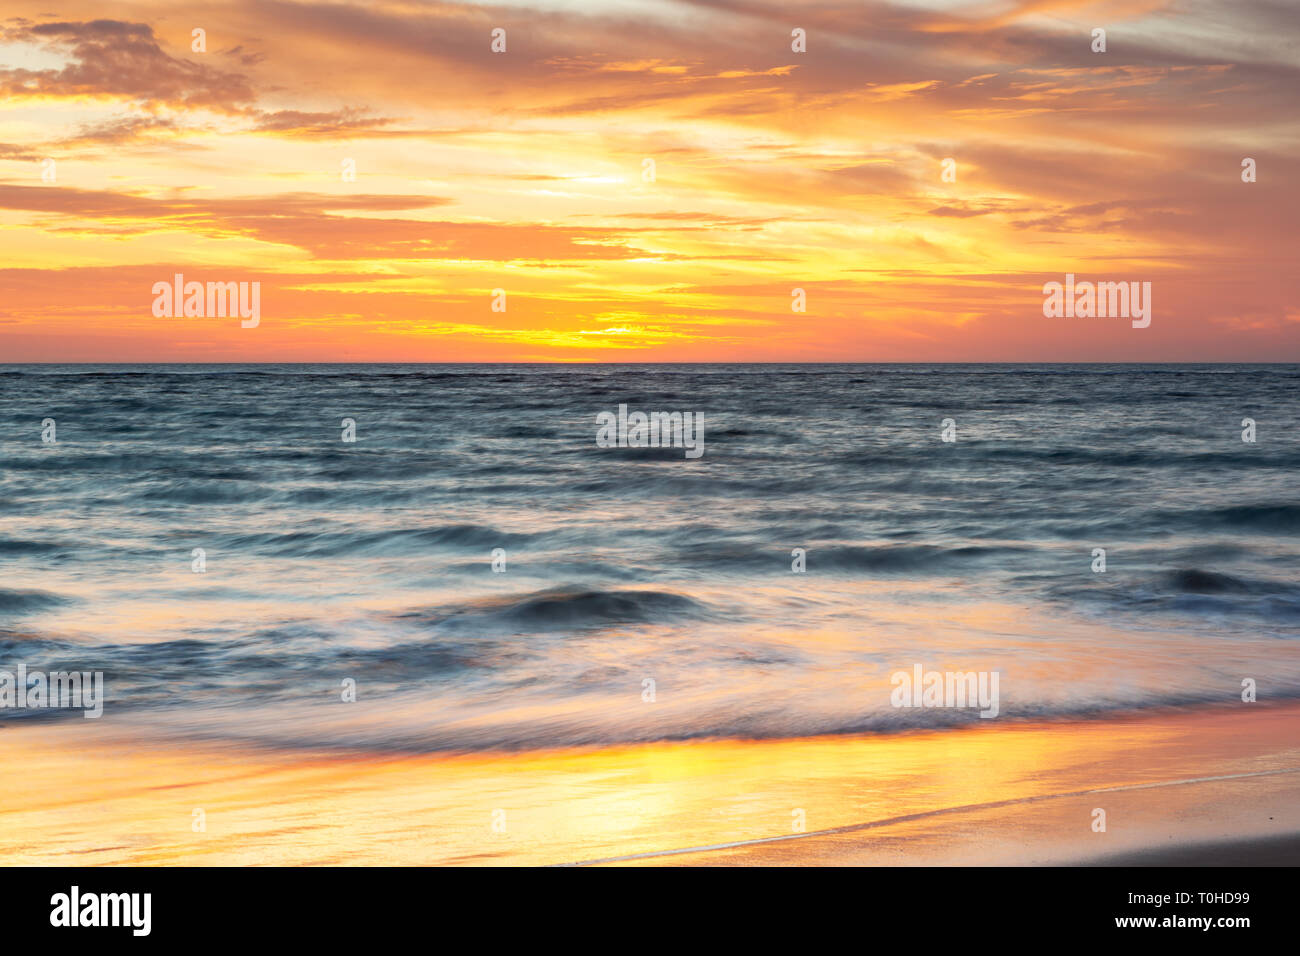 A beautiful sunset at Port Noarlunga with sunset reflections on the sand at Port Noarlunga South Australia Stock Photo